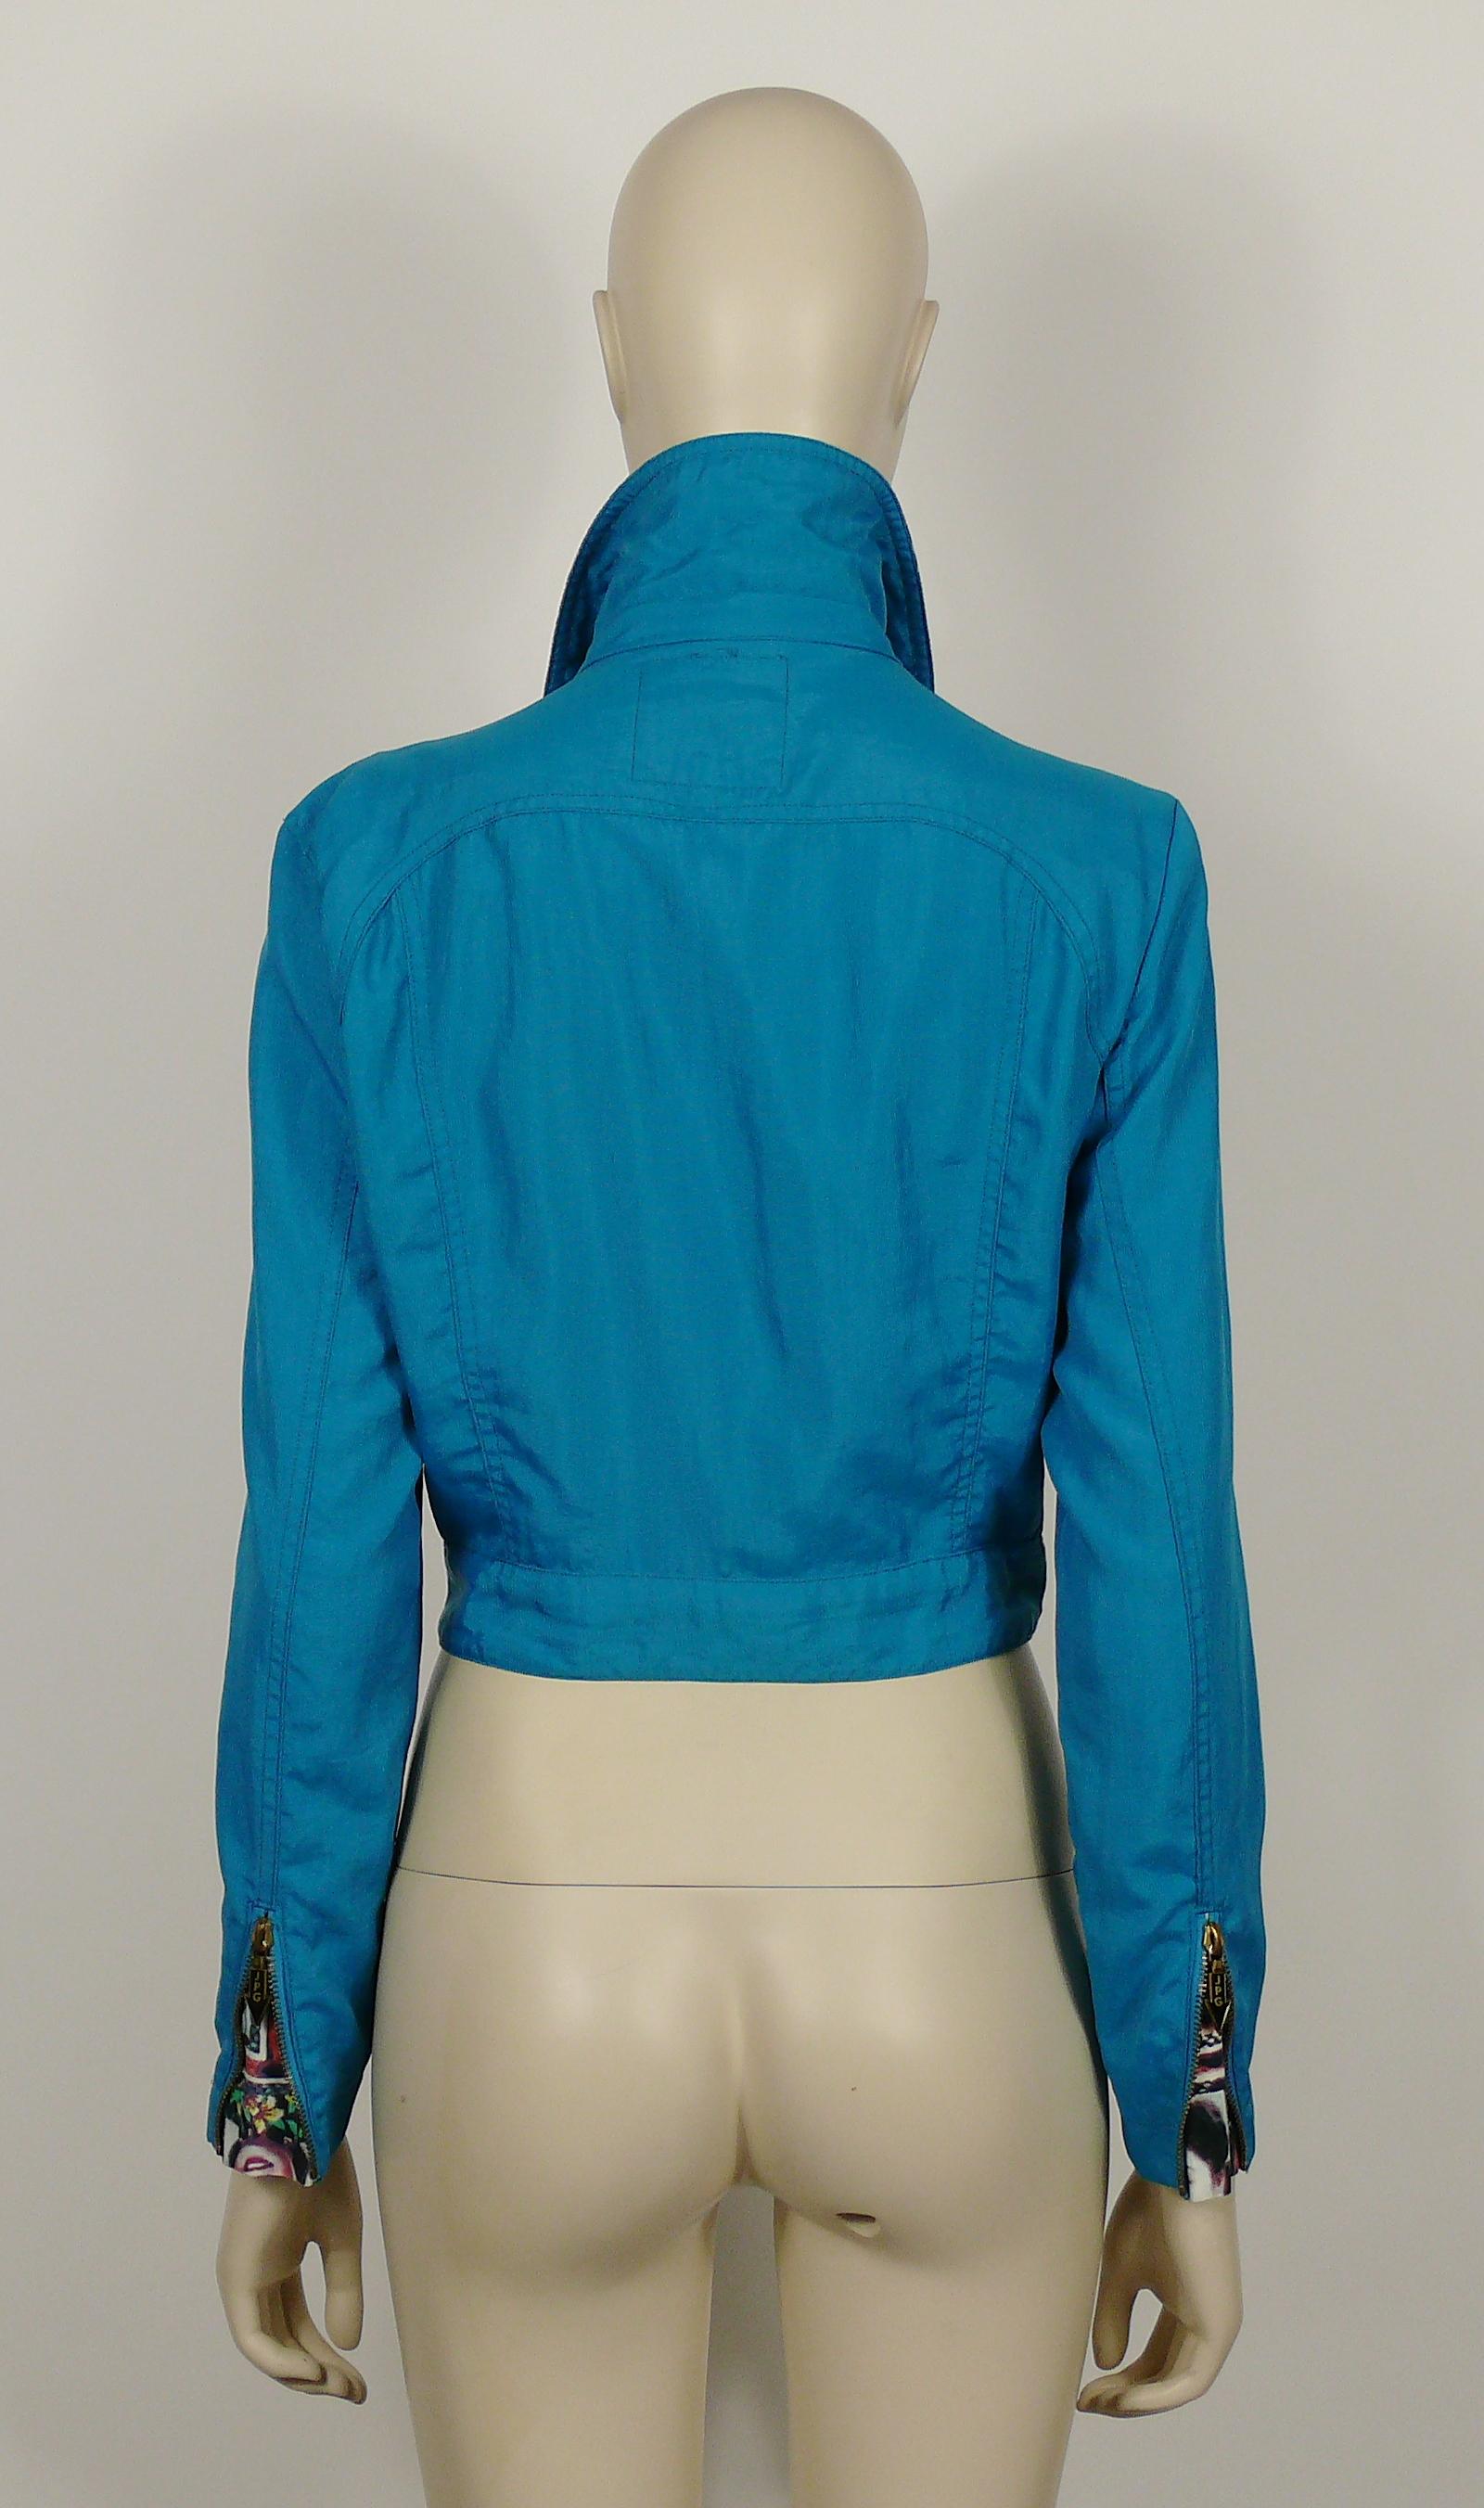 Jean Paul Gaultier Vintage Blue Cropped Biker Jacket with Portraits Details For Sale 9